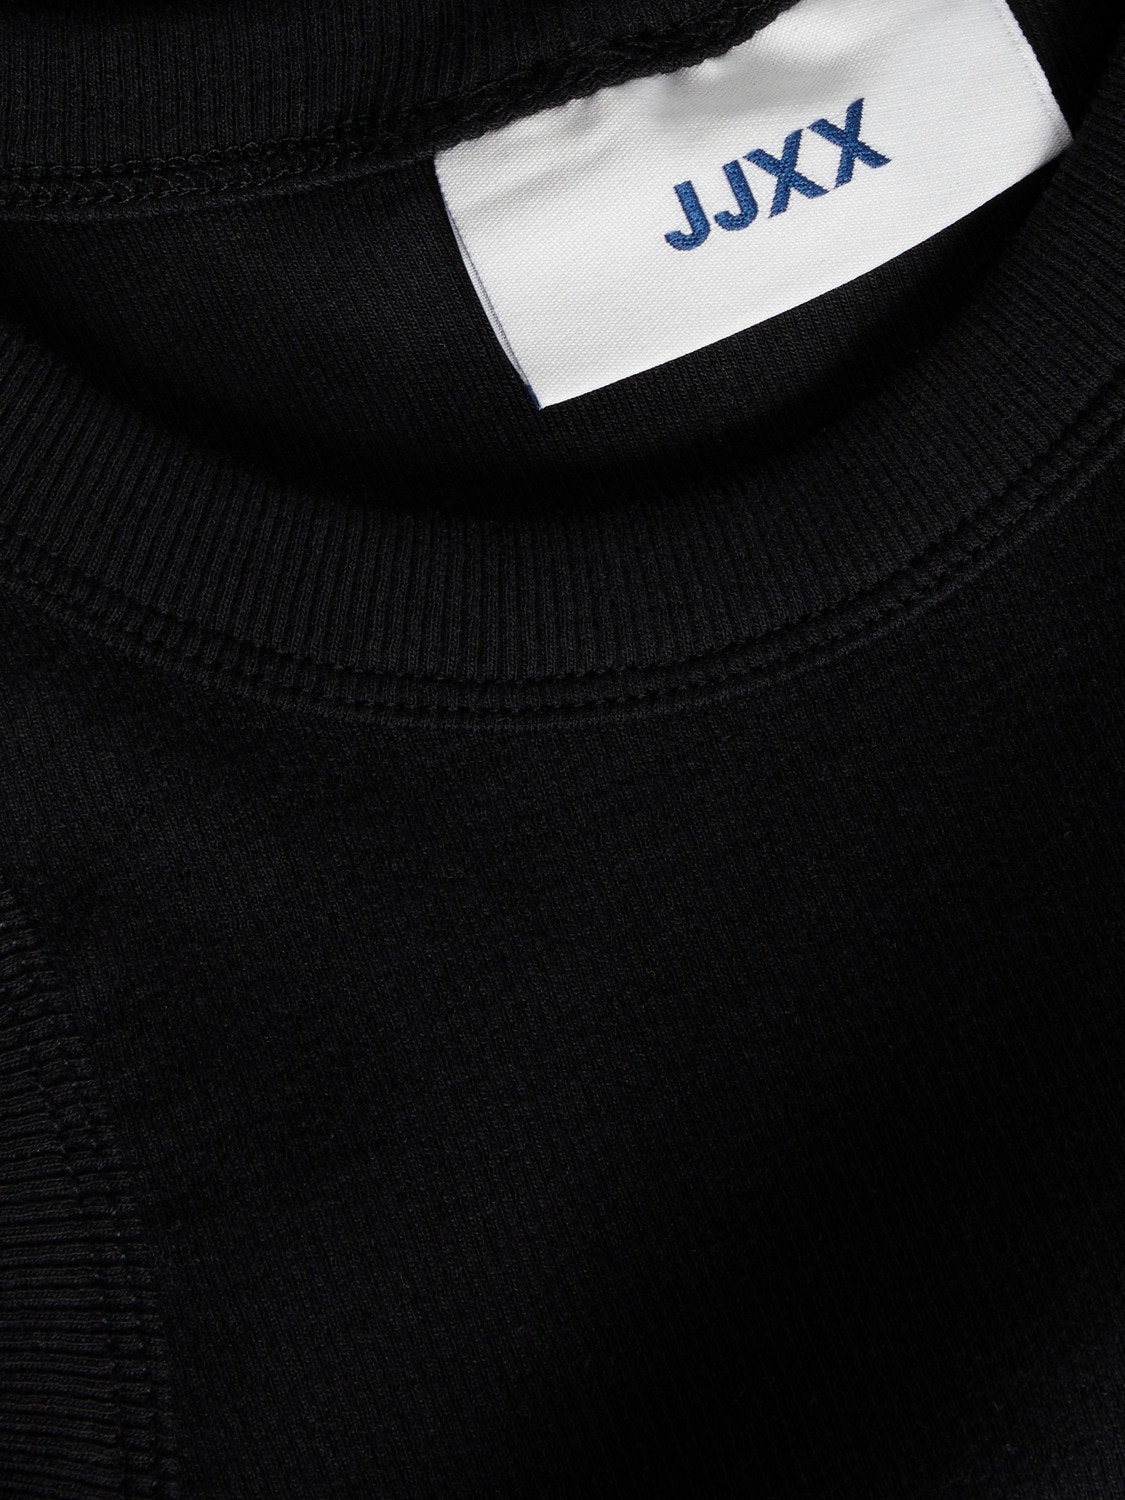 JJXX JXFOREST Vestido -Black - 12248657